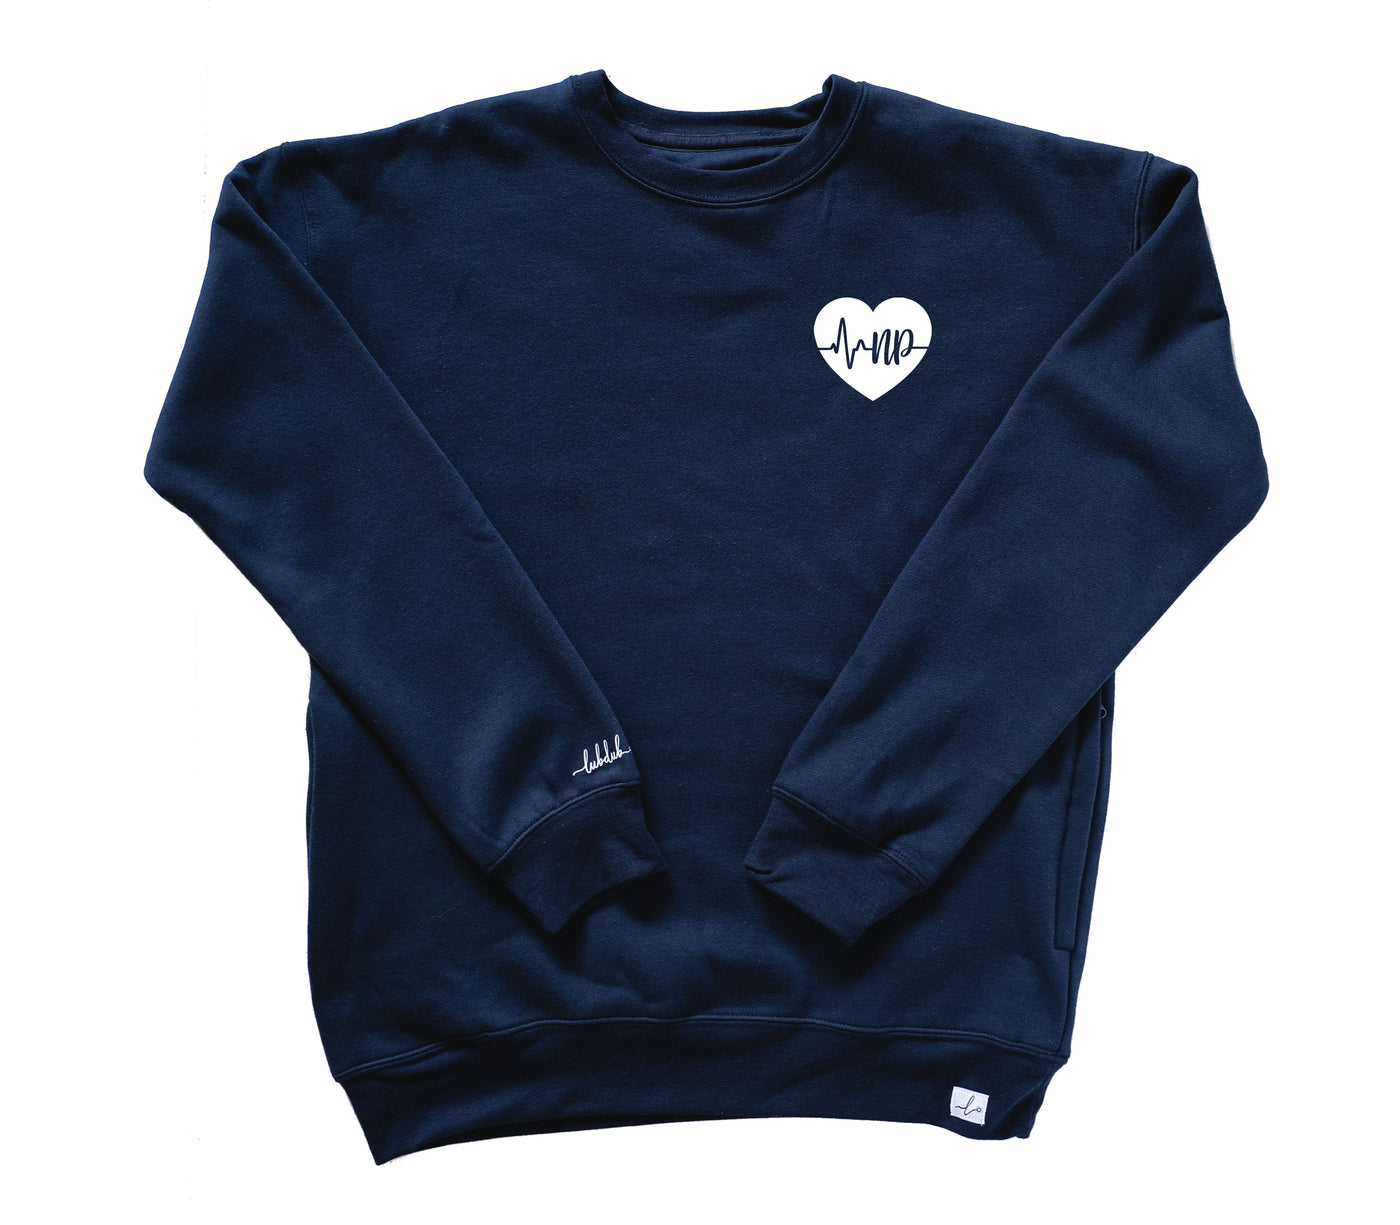 NP ECG Heart - Pocketed Crew Sweatshirt